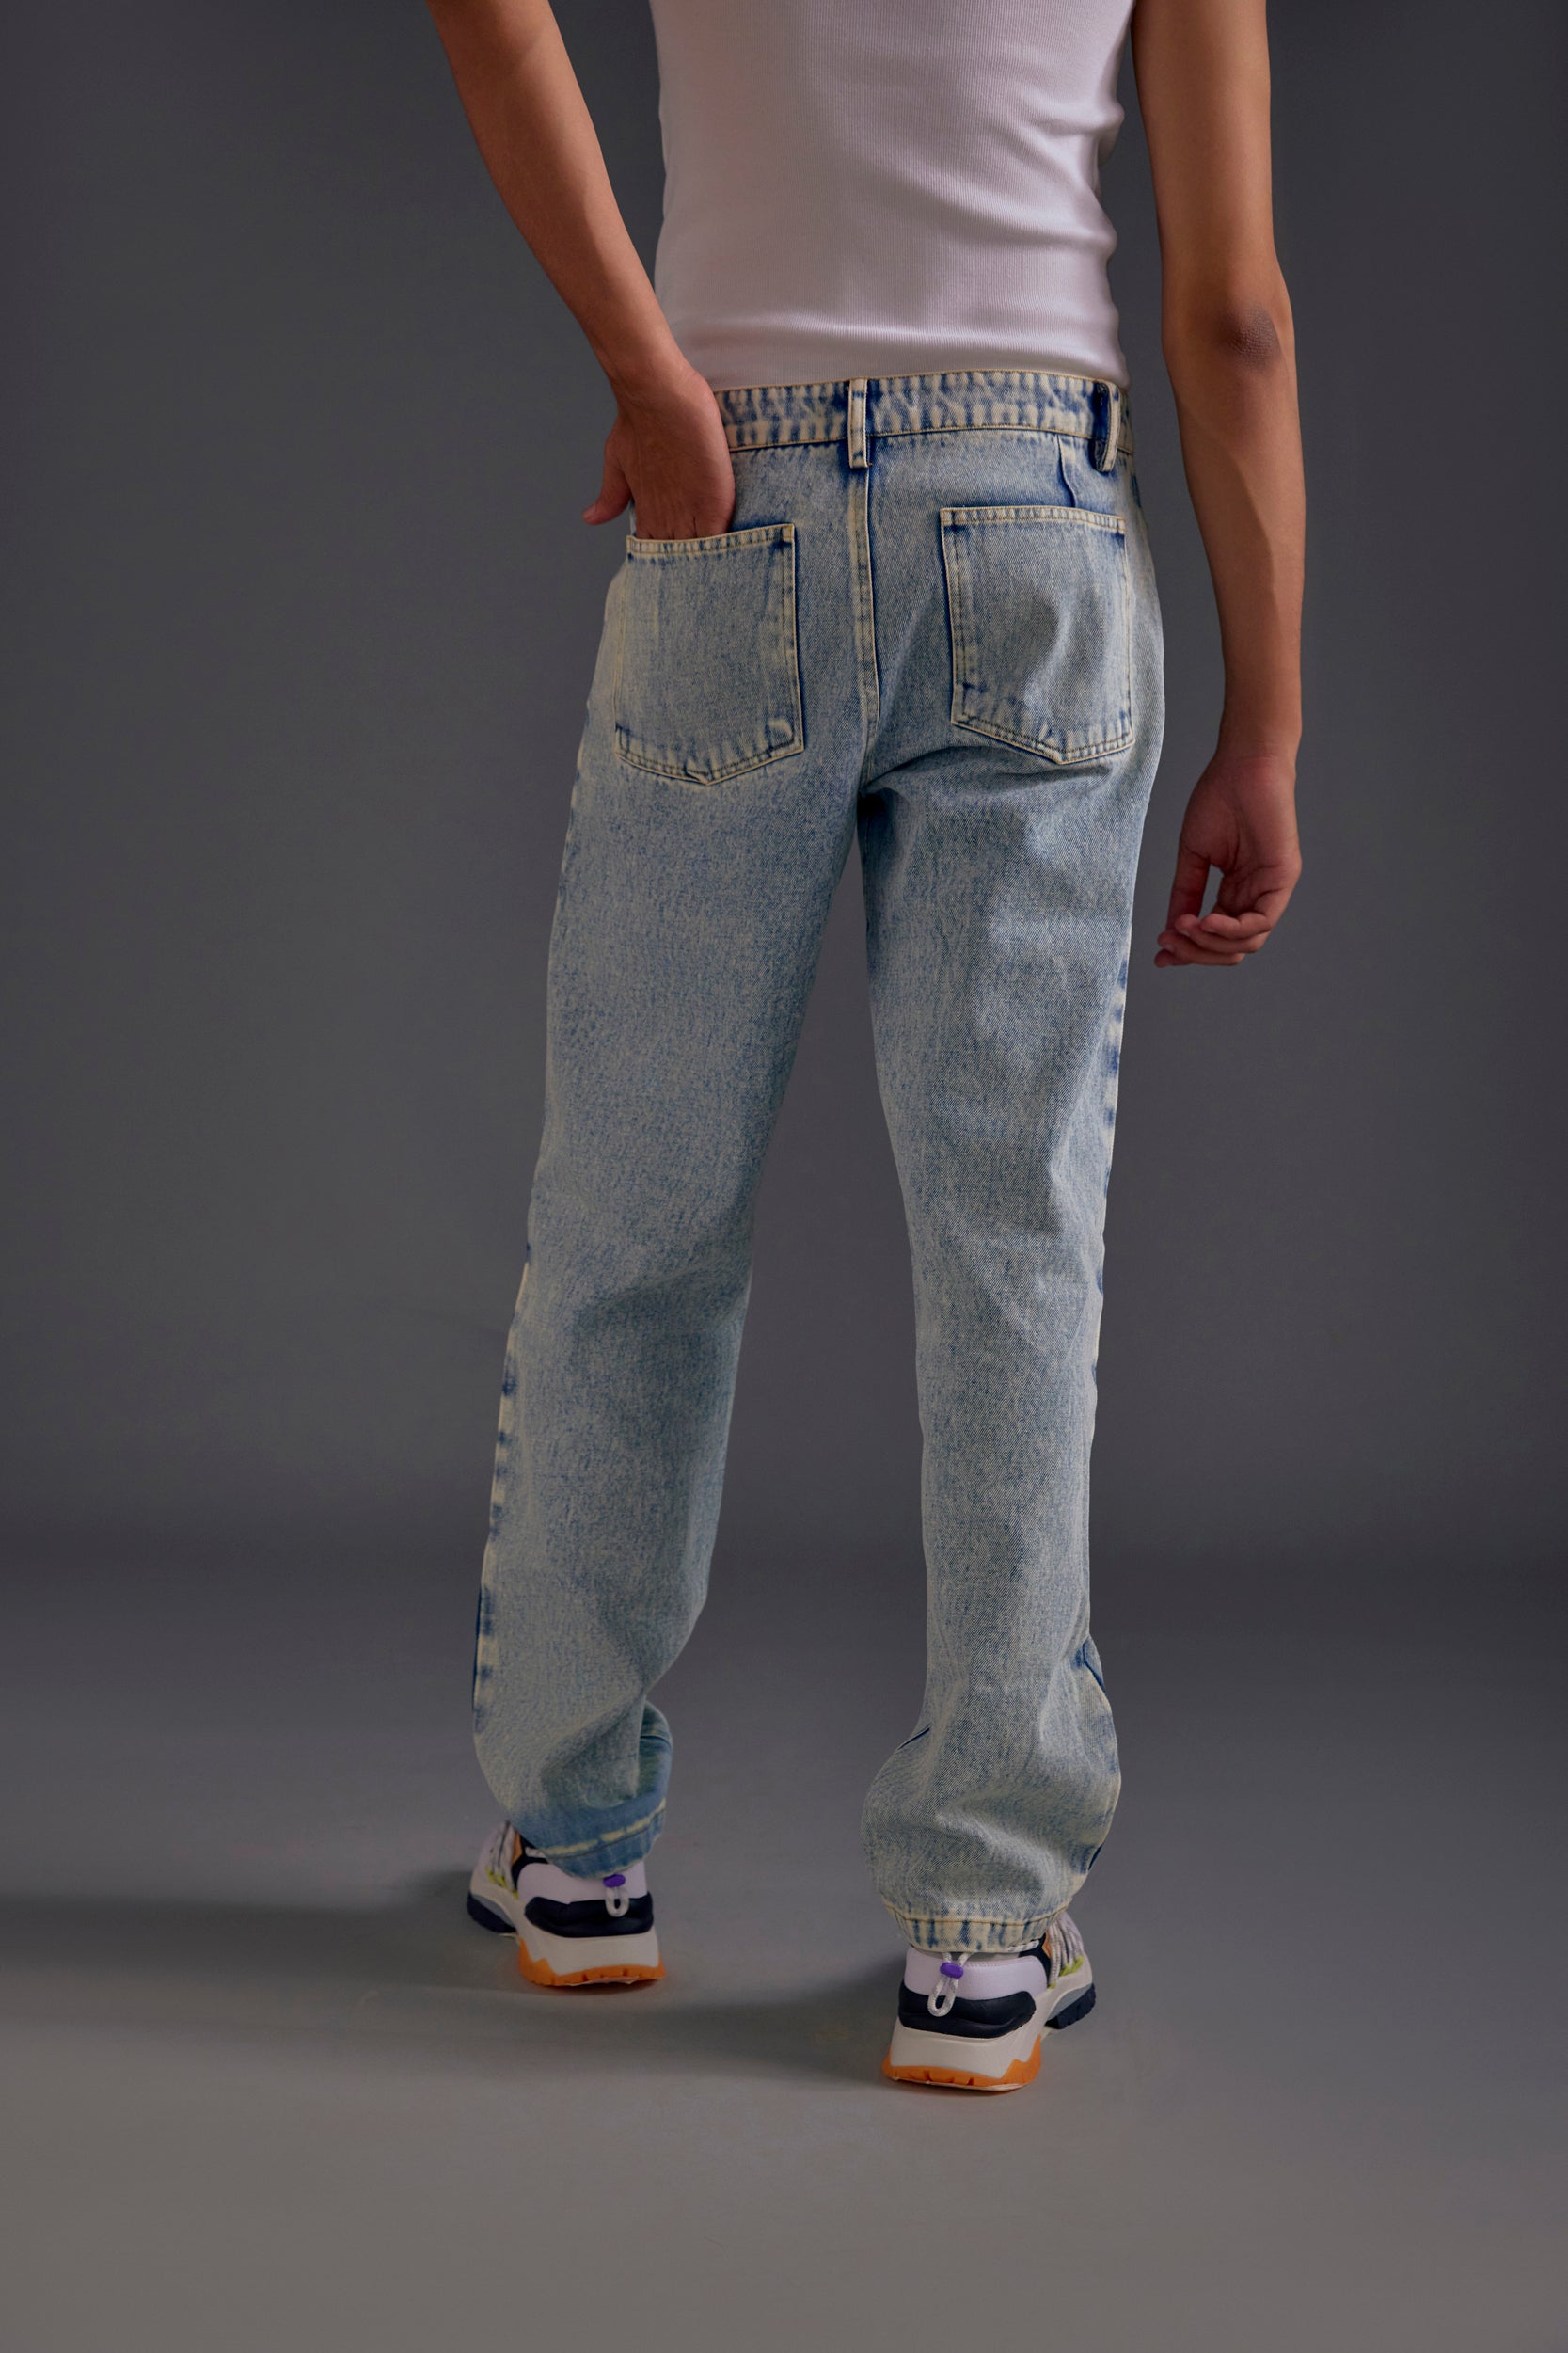 White Blazer DB Blazer + Knee Ripped Jeans | Ripped knee jeans, Ripped jeans  look, How to style ripped jeans